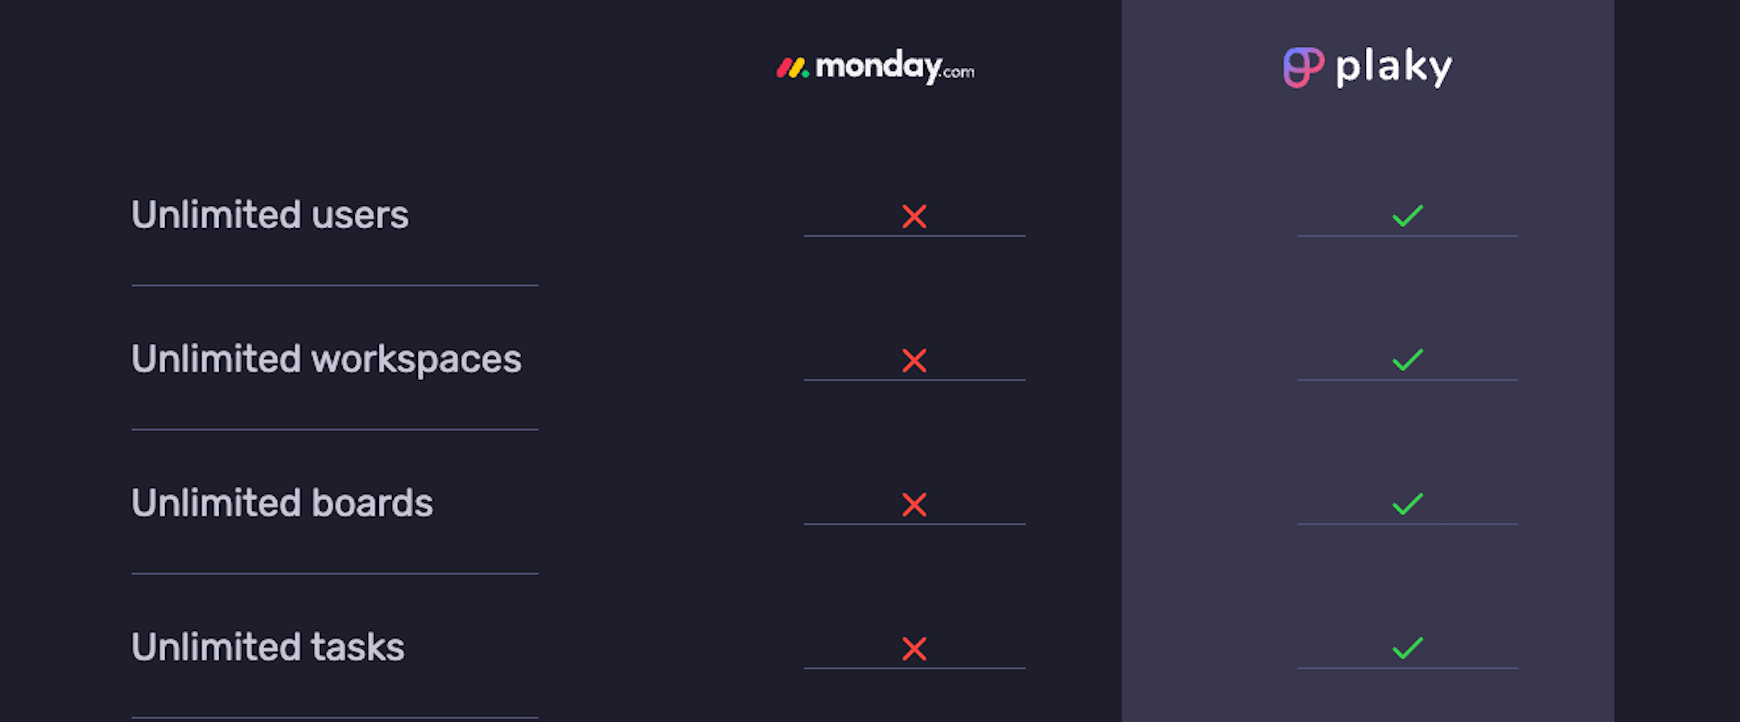 Plaky vs monday.com comparison